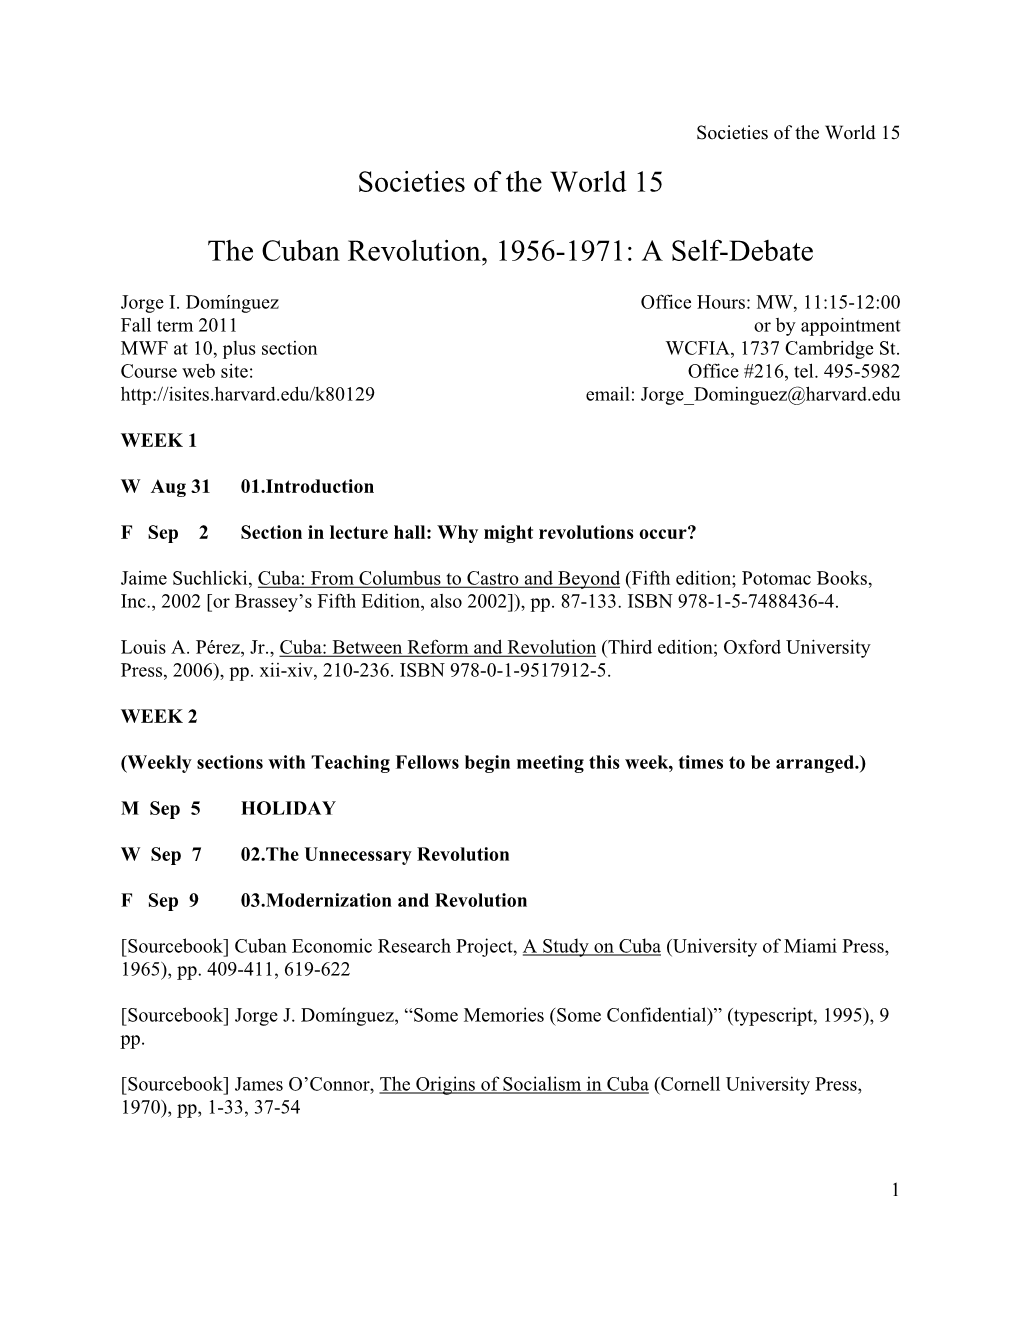 Societies of the World 15: the Cuban Revolution, 1956-1971